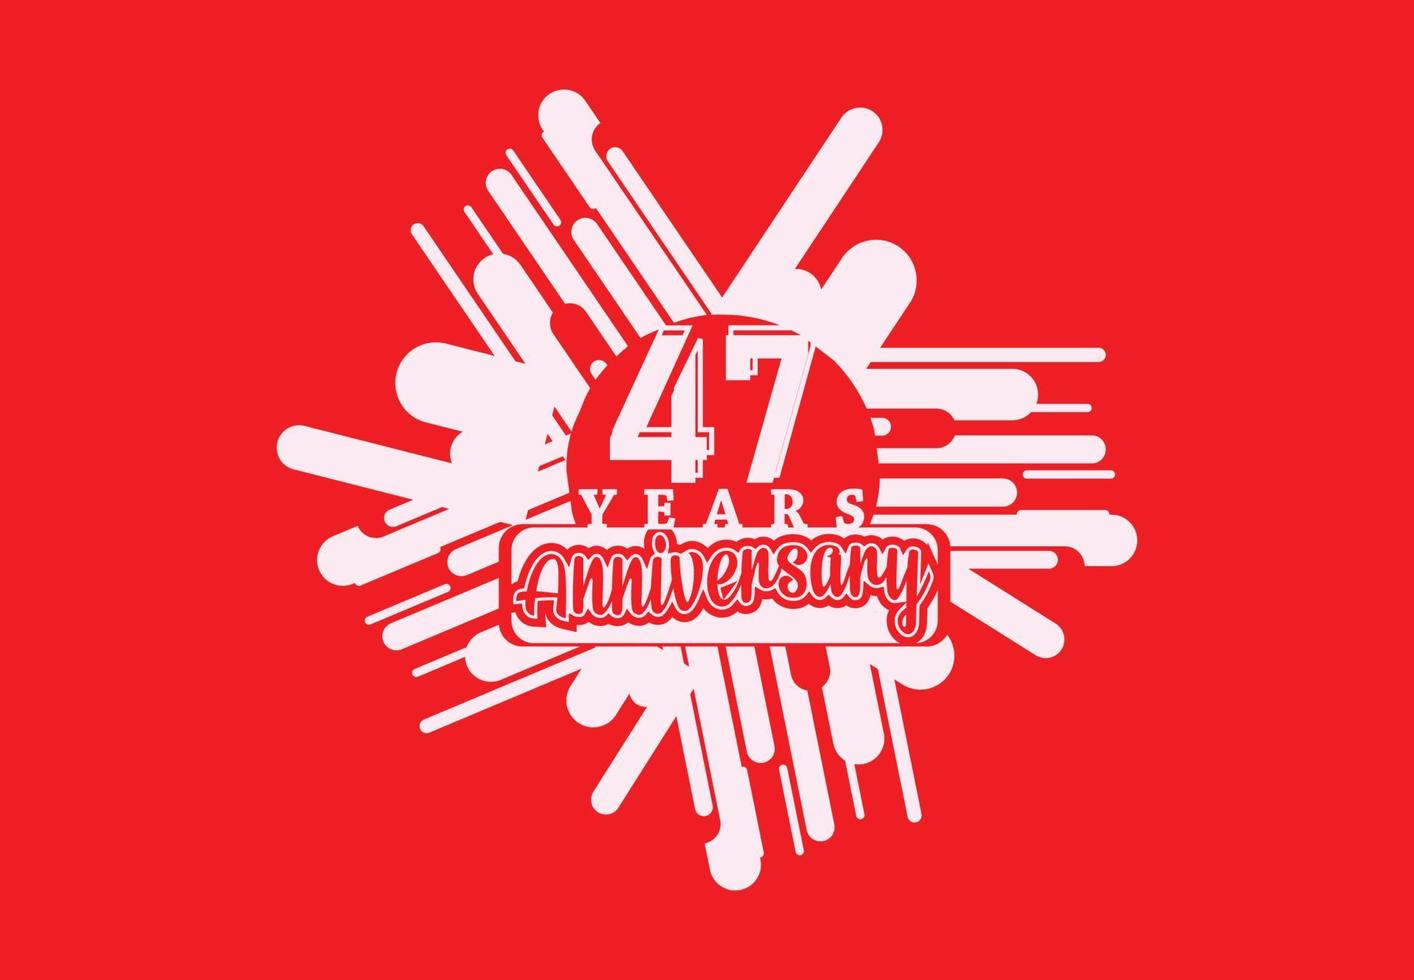 logotipo de aniversário de 47 anos e design de adesivo vetor